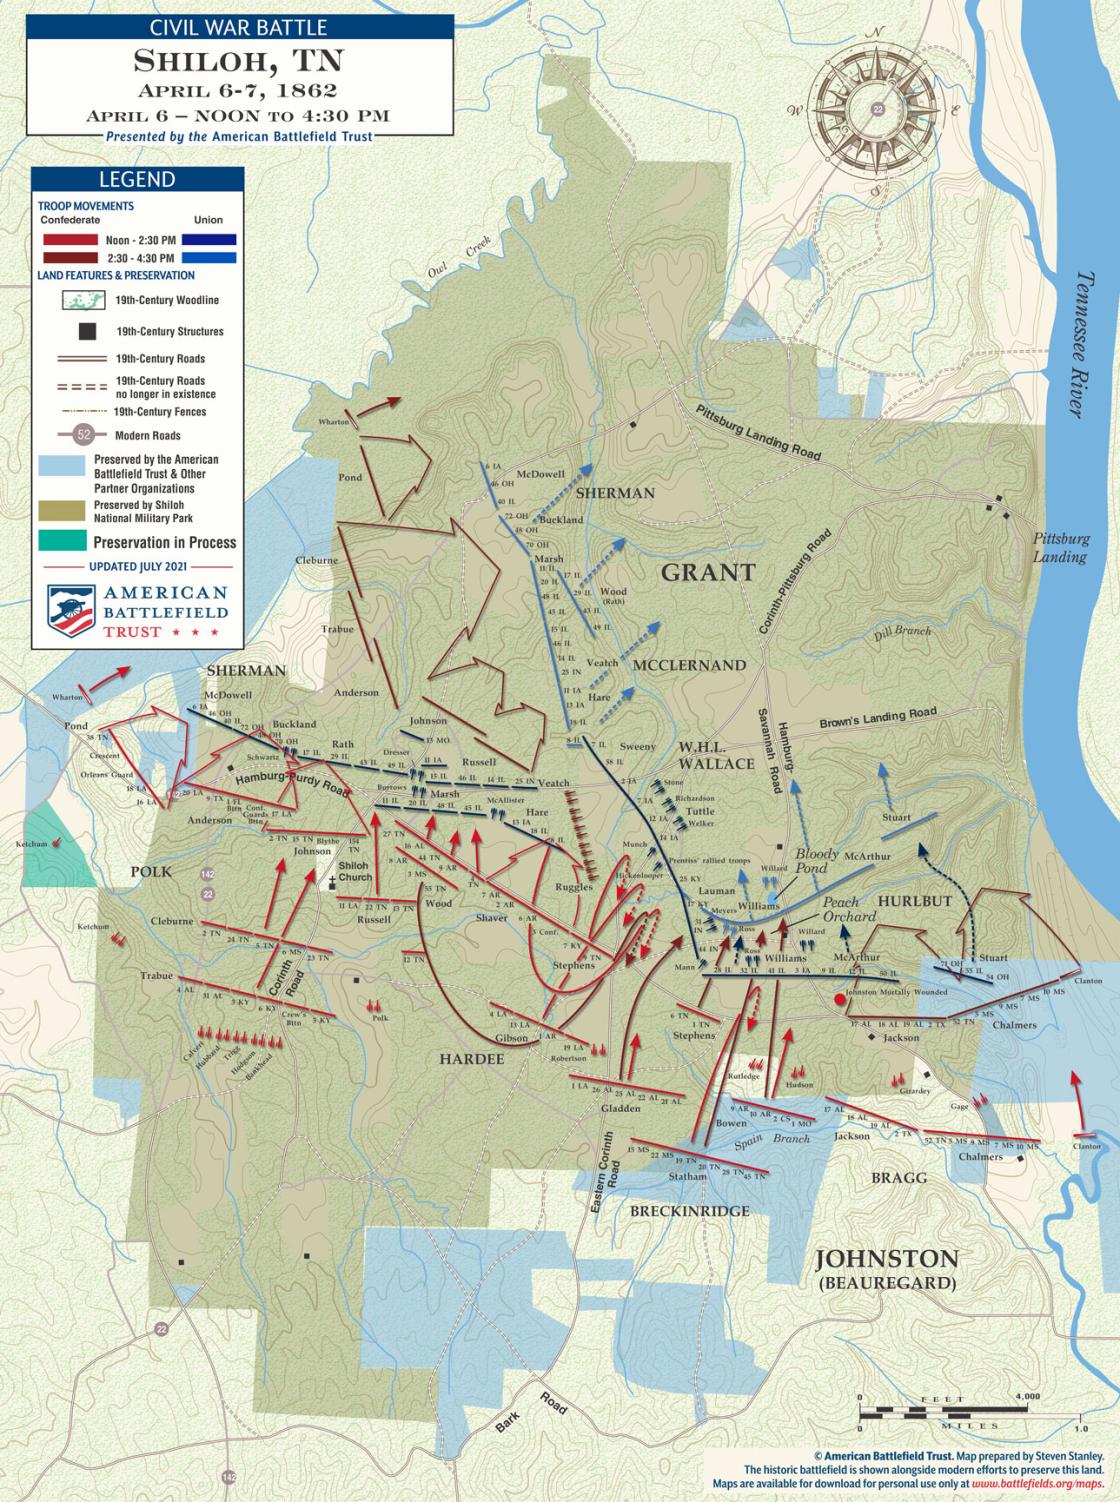 Shiloh - April 6, 1862 - Noon to 4:30pm Battle Map